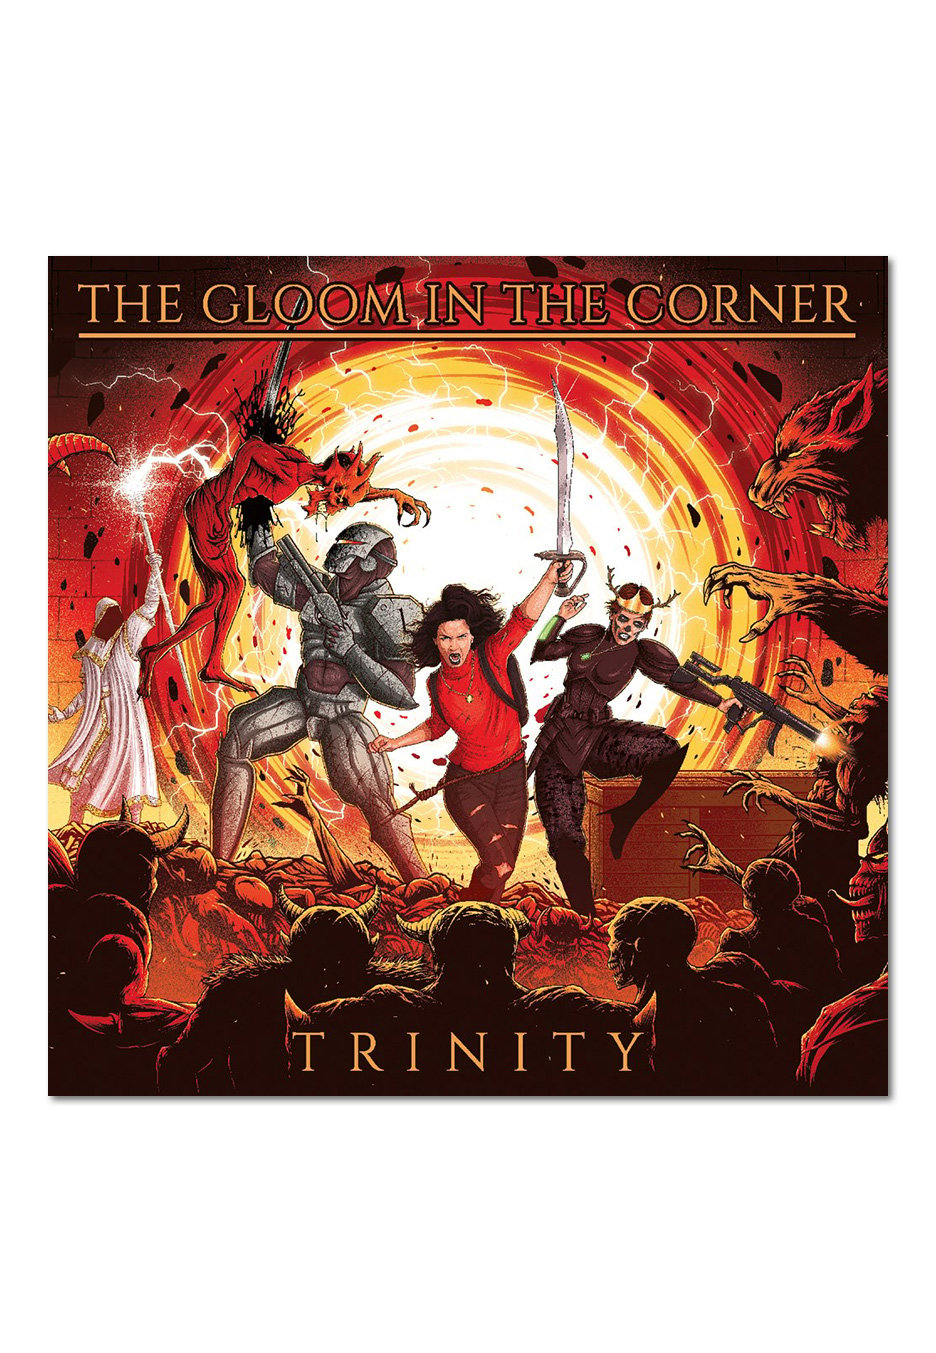 The Gloom In The Corner - Trinity - CD